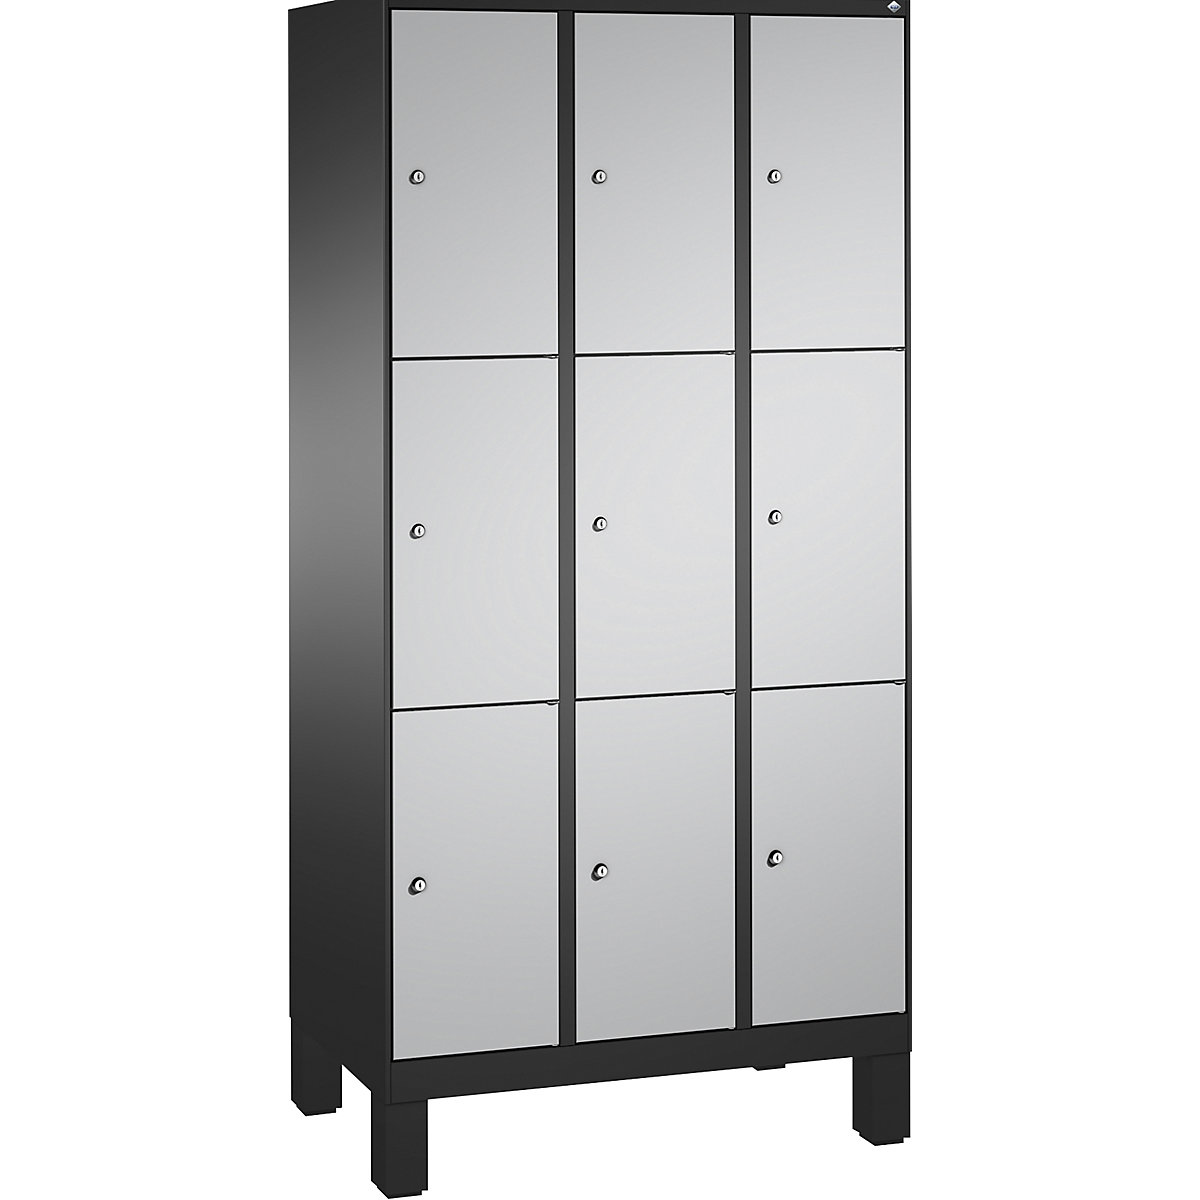 EVOLO locker unit, with feet – C+P, 3 compartments, 3 shelf compartments each, compartment width 300 mm, black grey / white aluminium-6